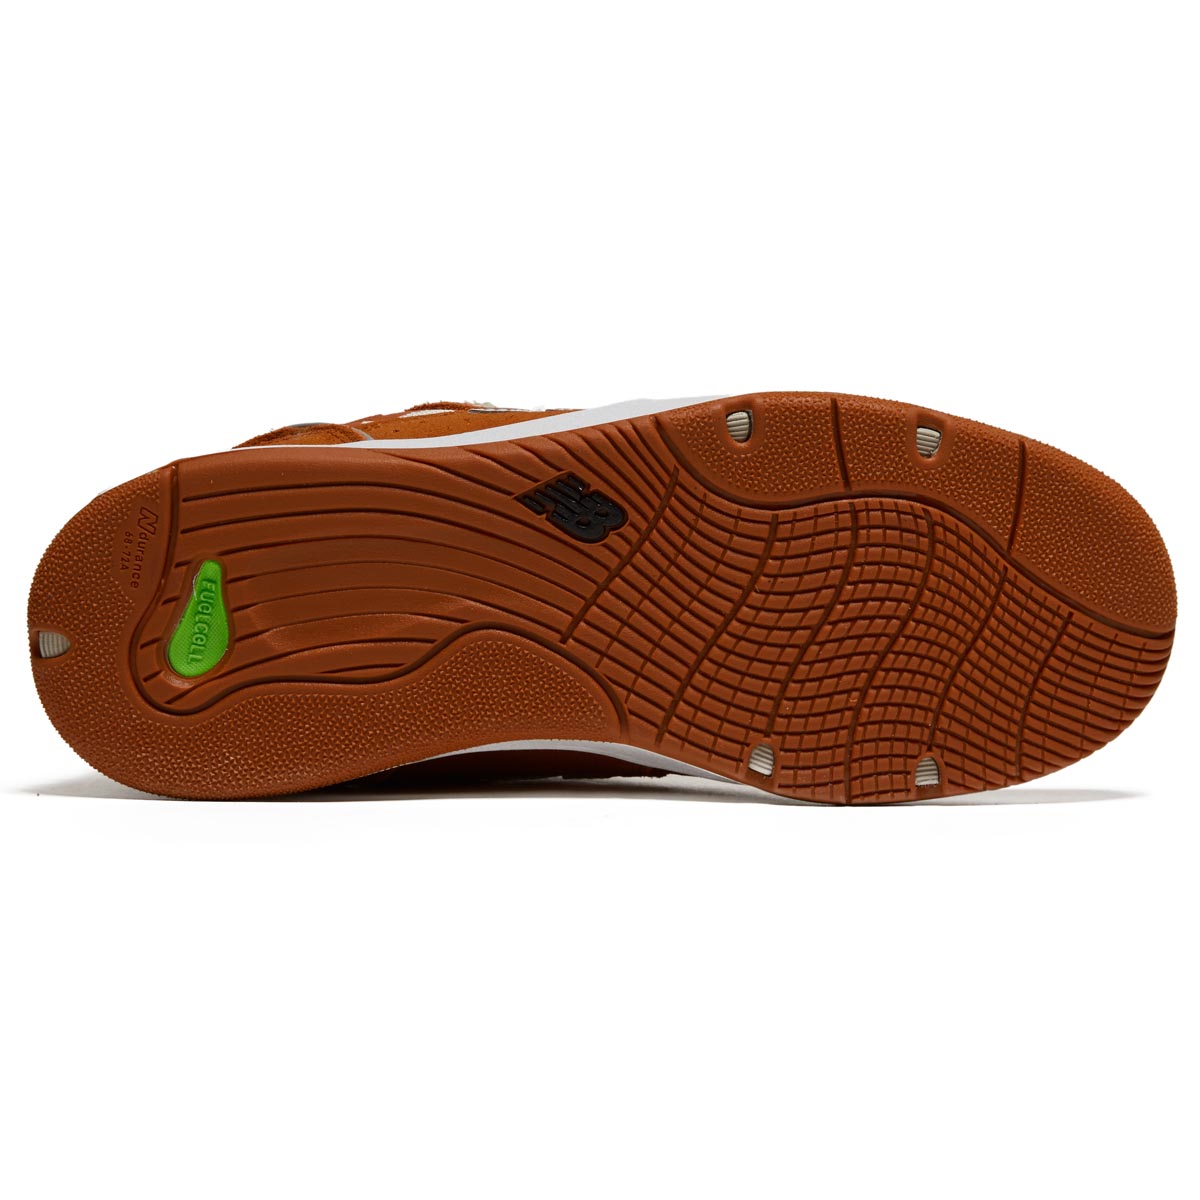 New Balance 1010 Tiago Shoes - Rust Oxide image 4